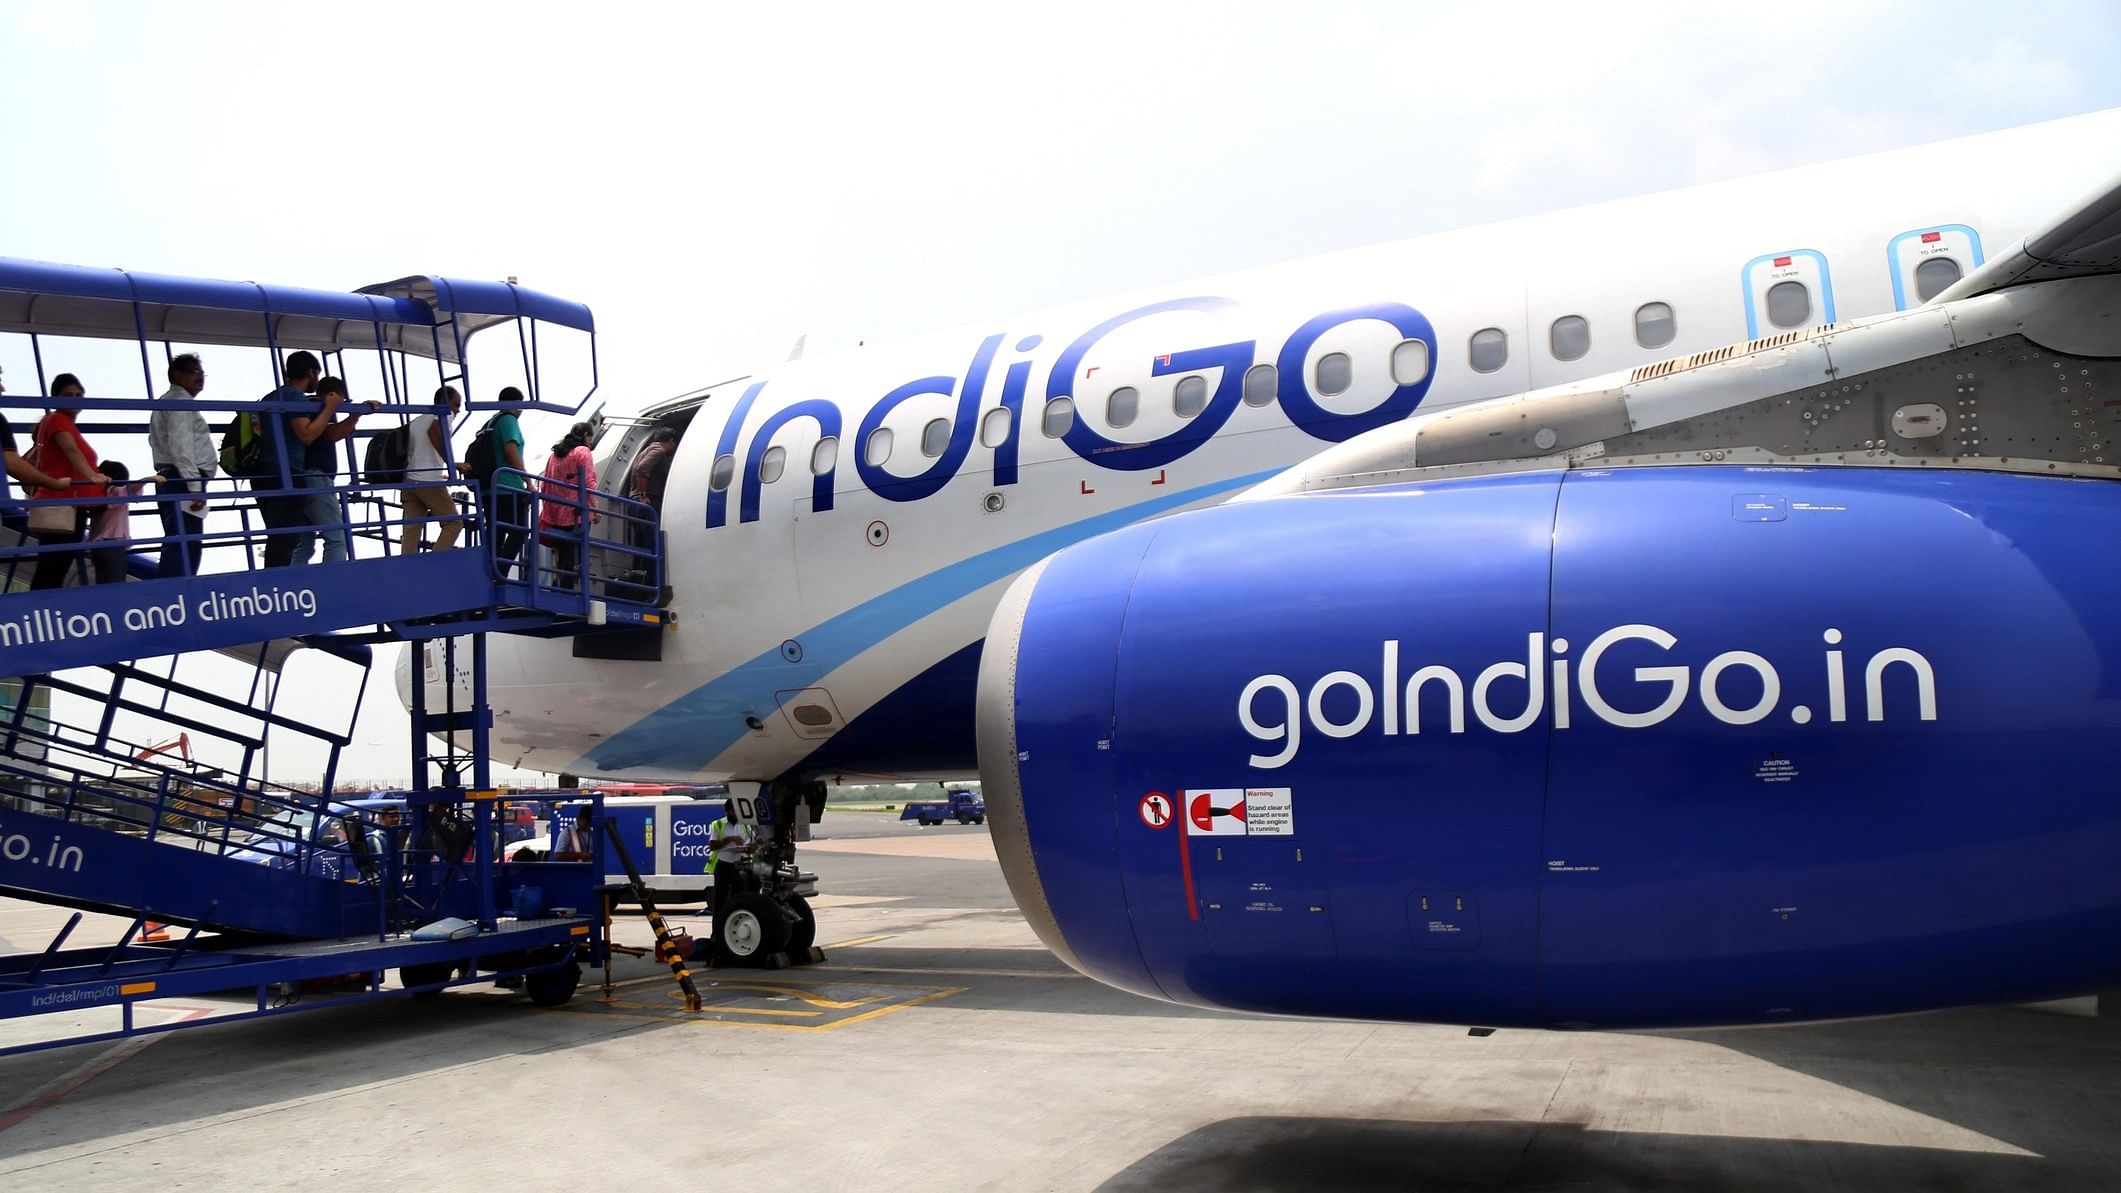 <div class="paragraphs"><p>Representative image showing passengers board an IndiGo flight.</p></div>